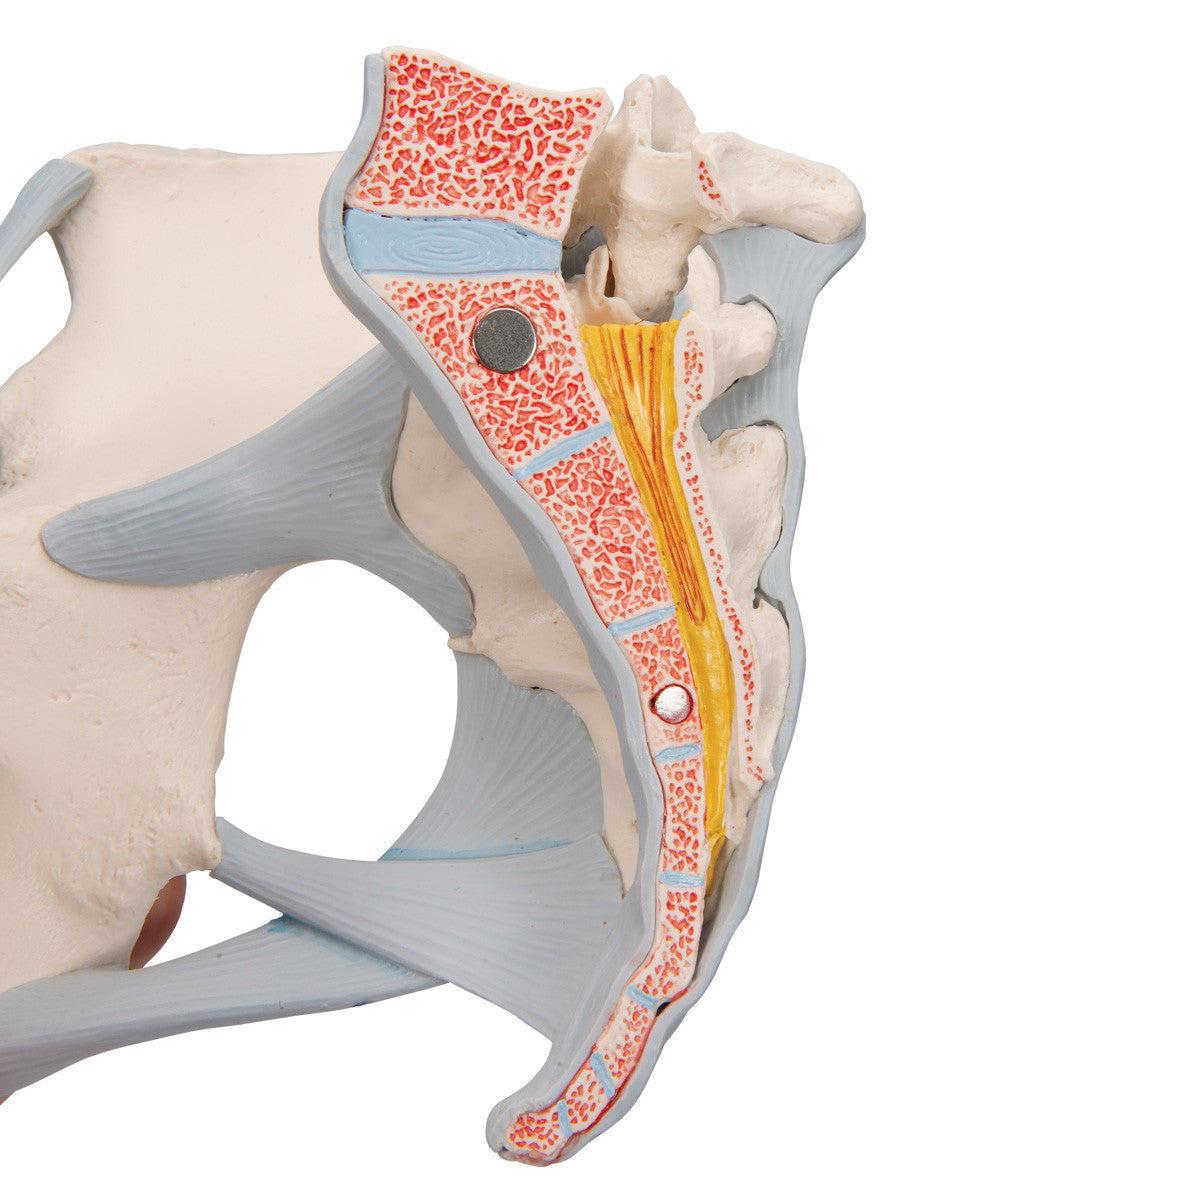 Female Pelvis Skeleton Model with Ligaments, 3 part - cross section